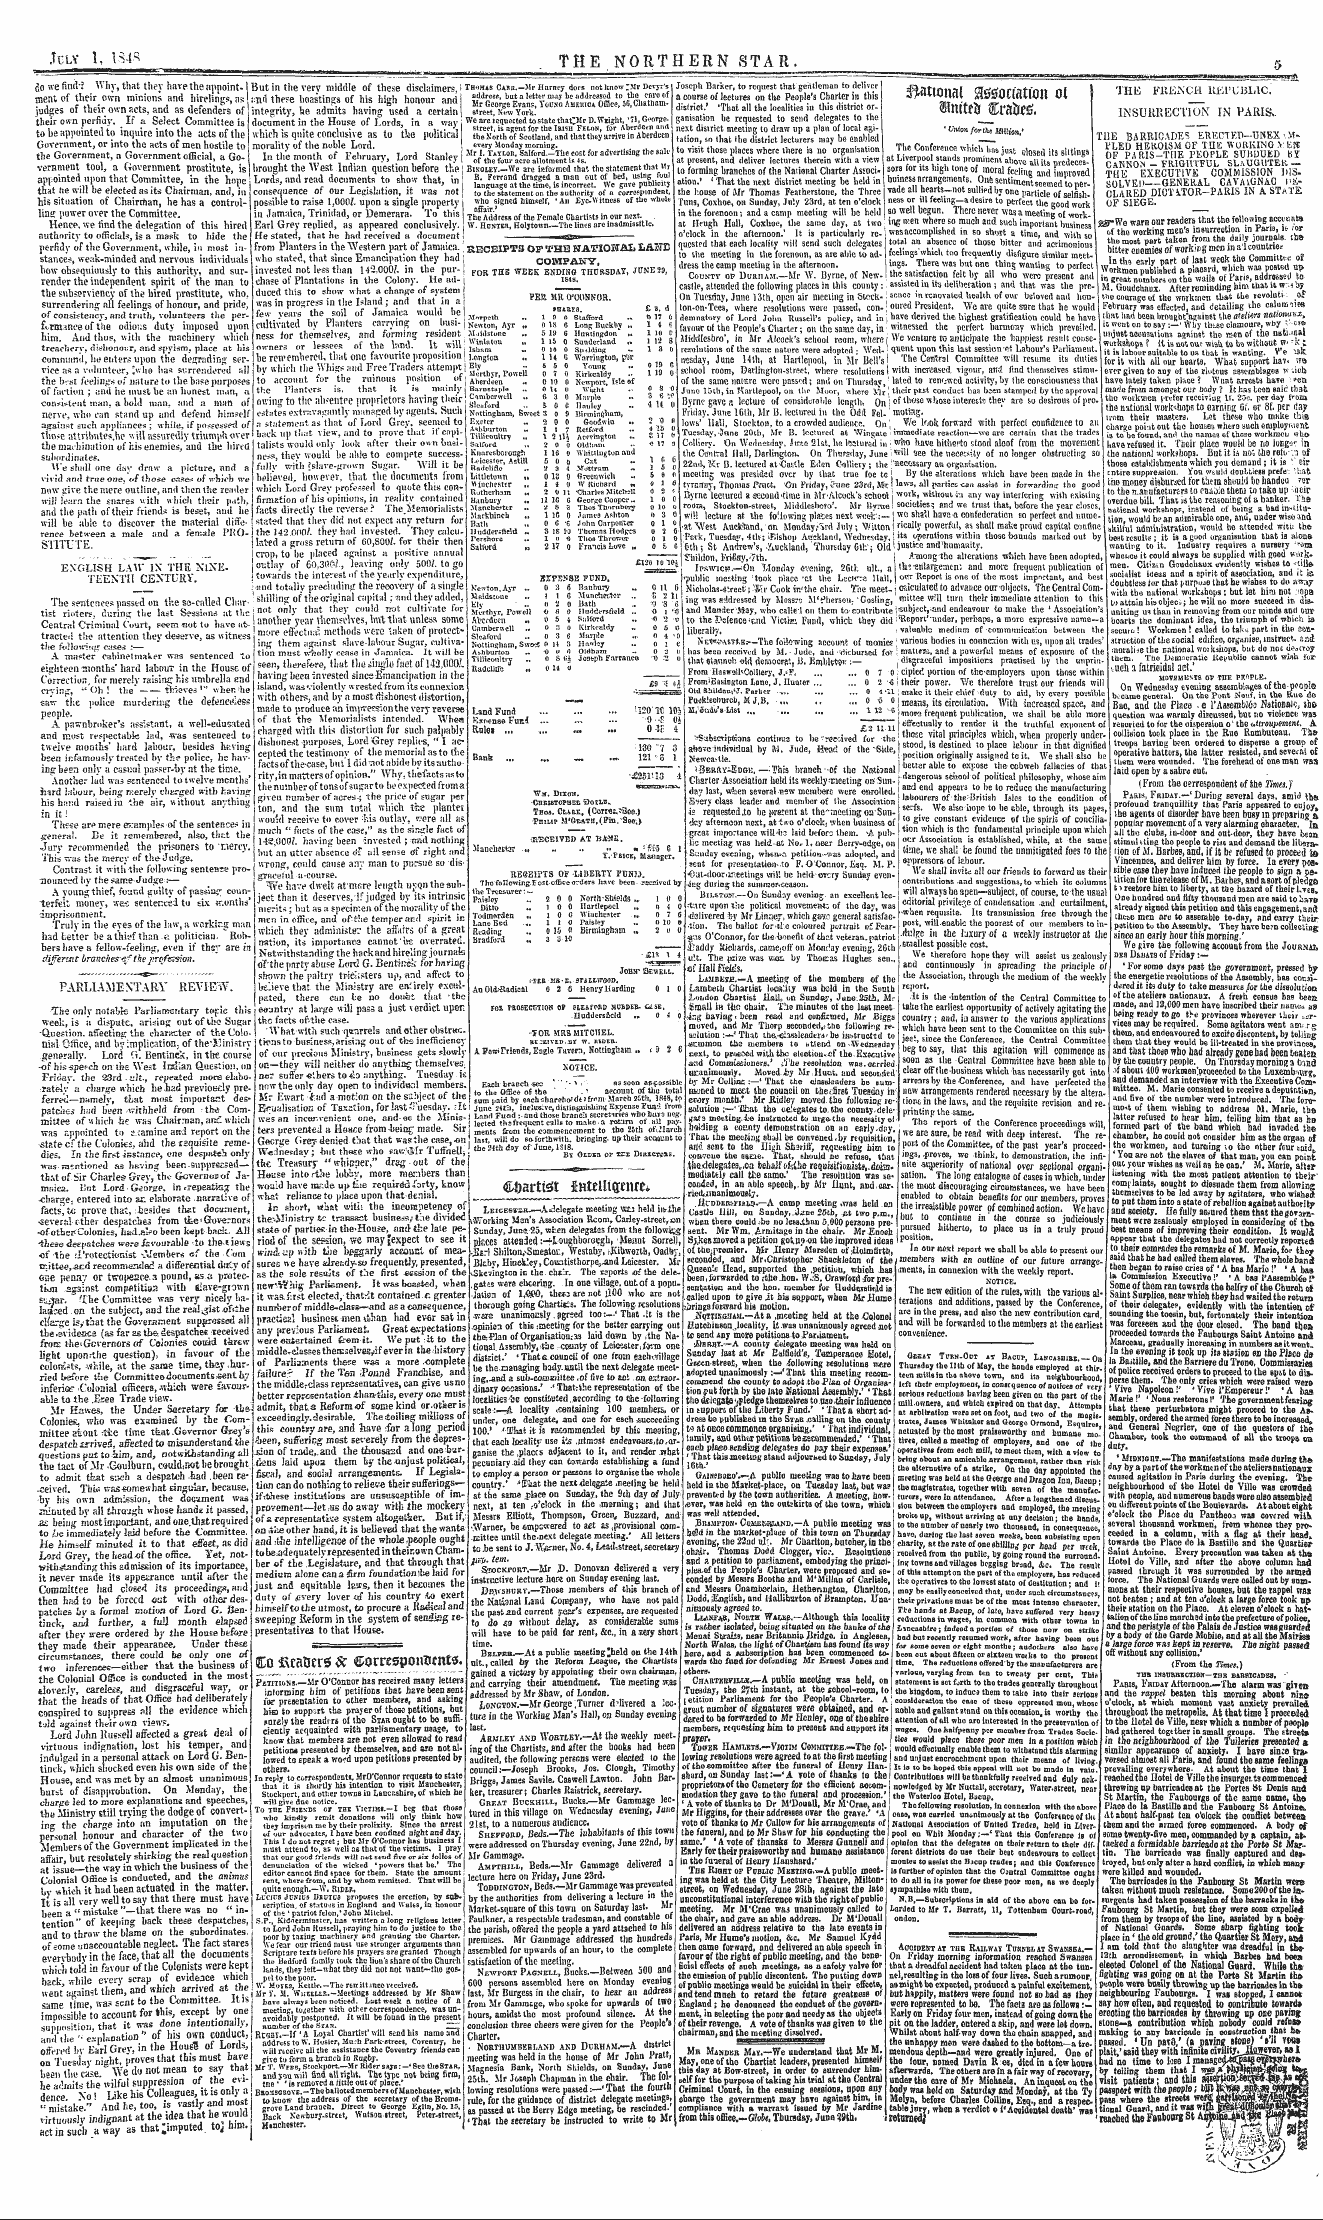 Northern Star (1837-1852): jS F Y, 3rd edition - .Os Mose-Dtloh 81* Eleafpbd Mobdek. C-.S...